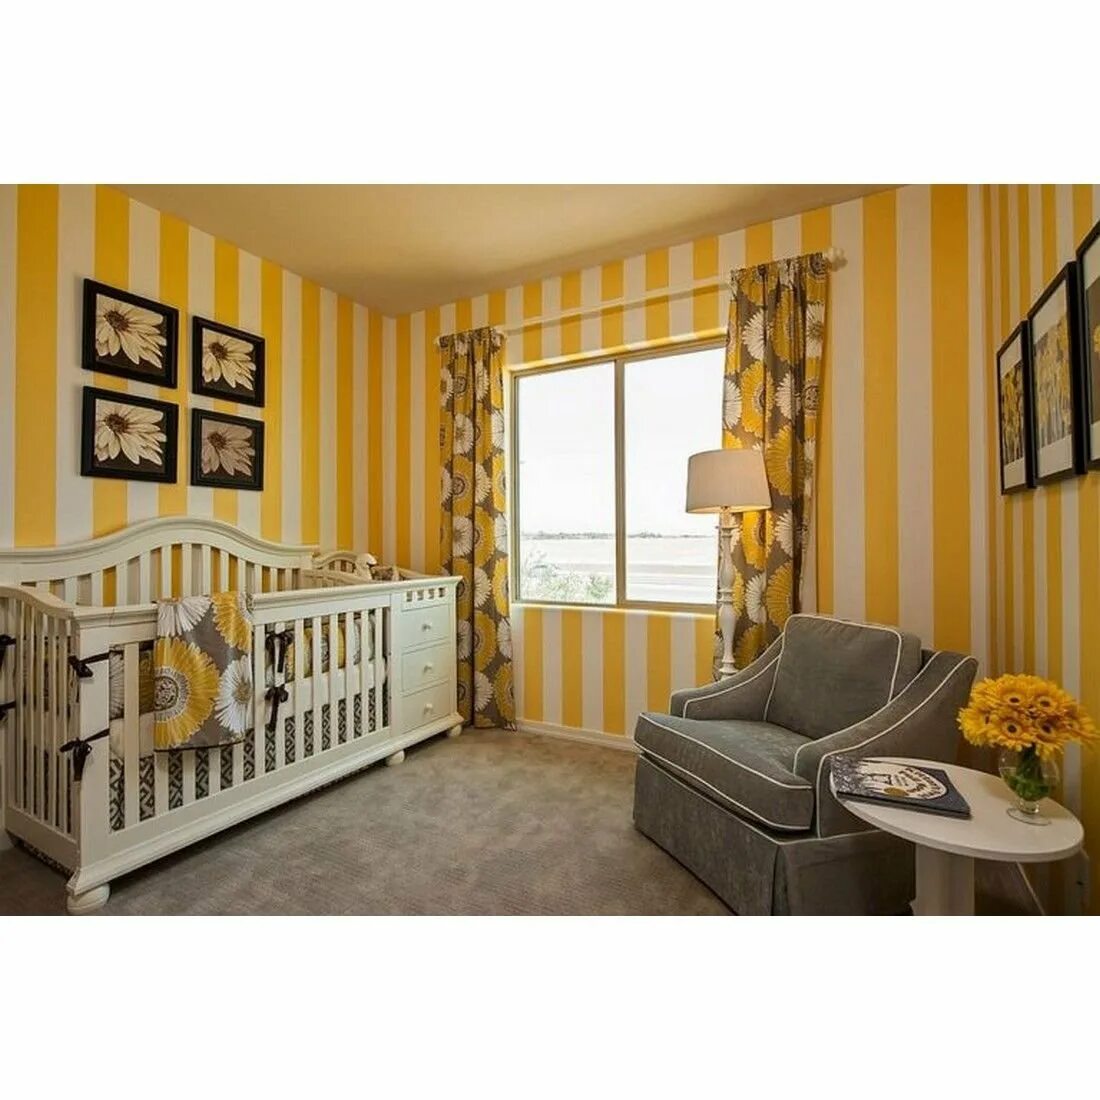 Baby and yellow. Детская с желтыми шторами. Полоски на стене. Детская комната с желтыми стенами. Детская комната в желтых тонах.